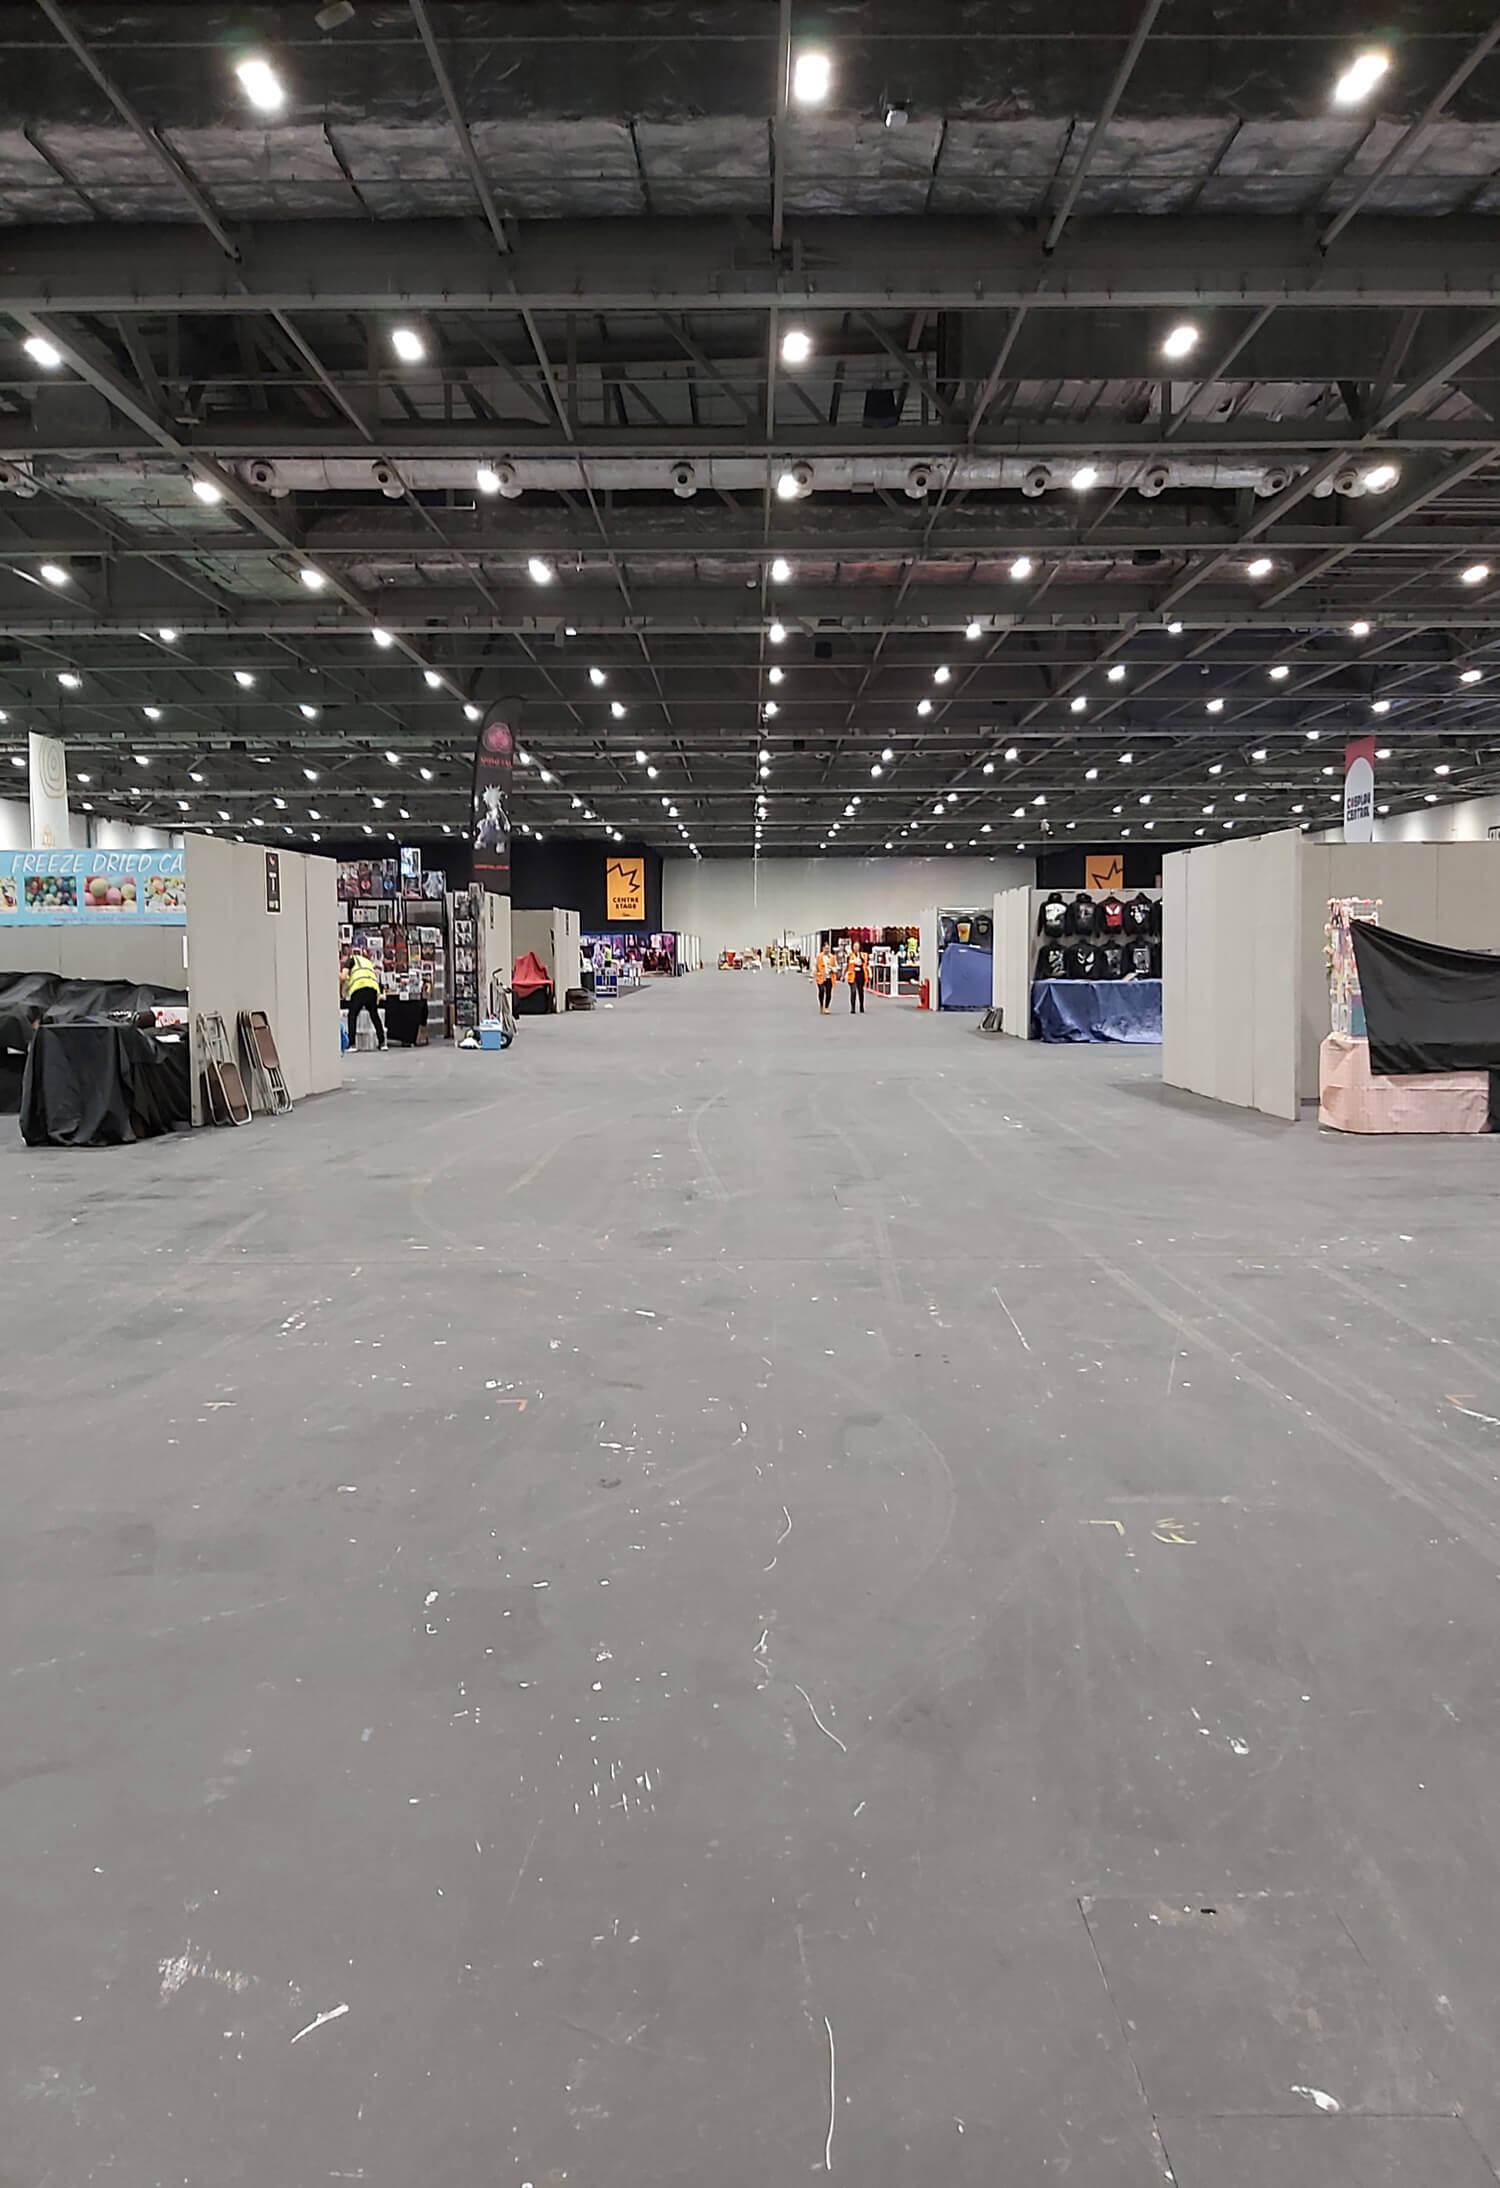 MCM London Comic Con - set up at ExCel London image